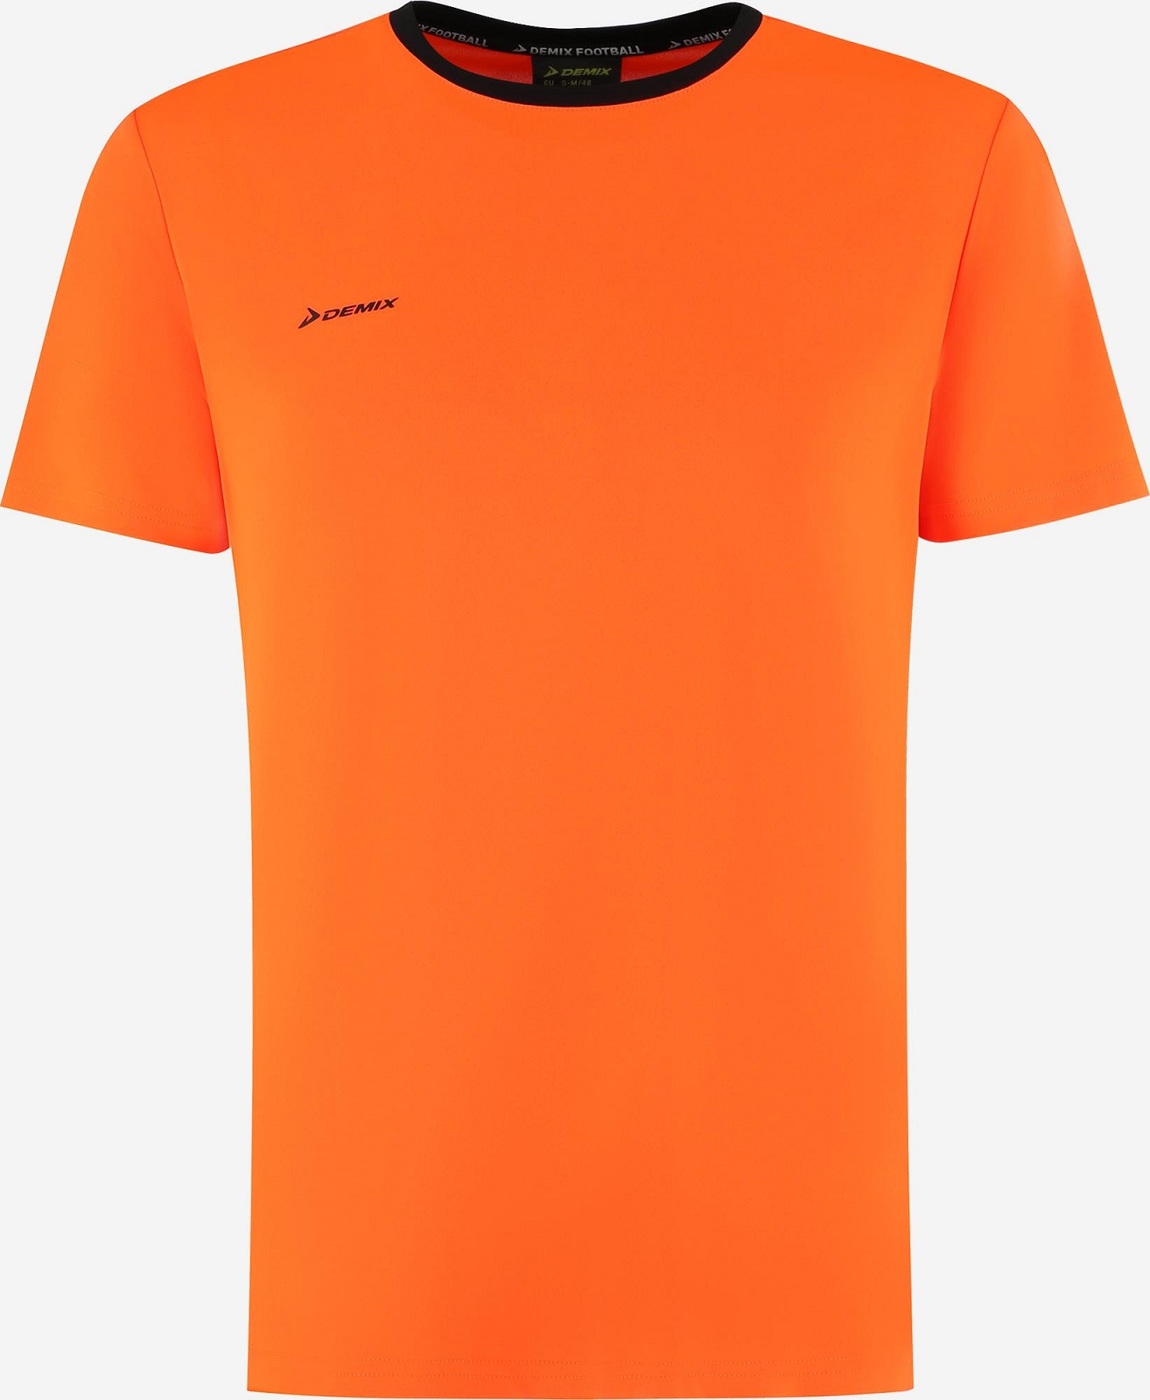 Спортмастер Reebok оранжевая футболка